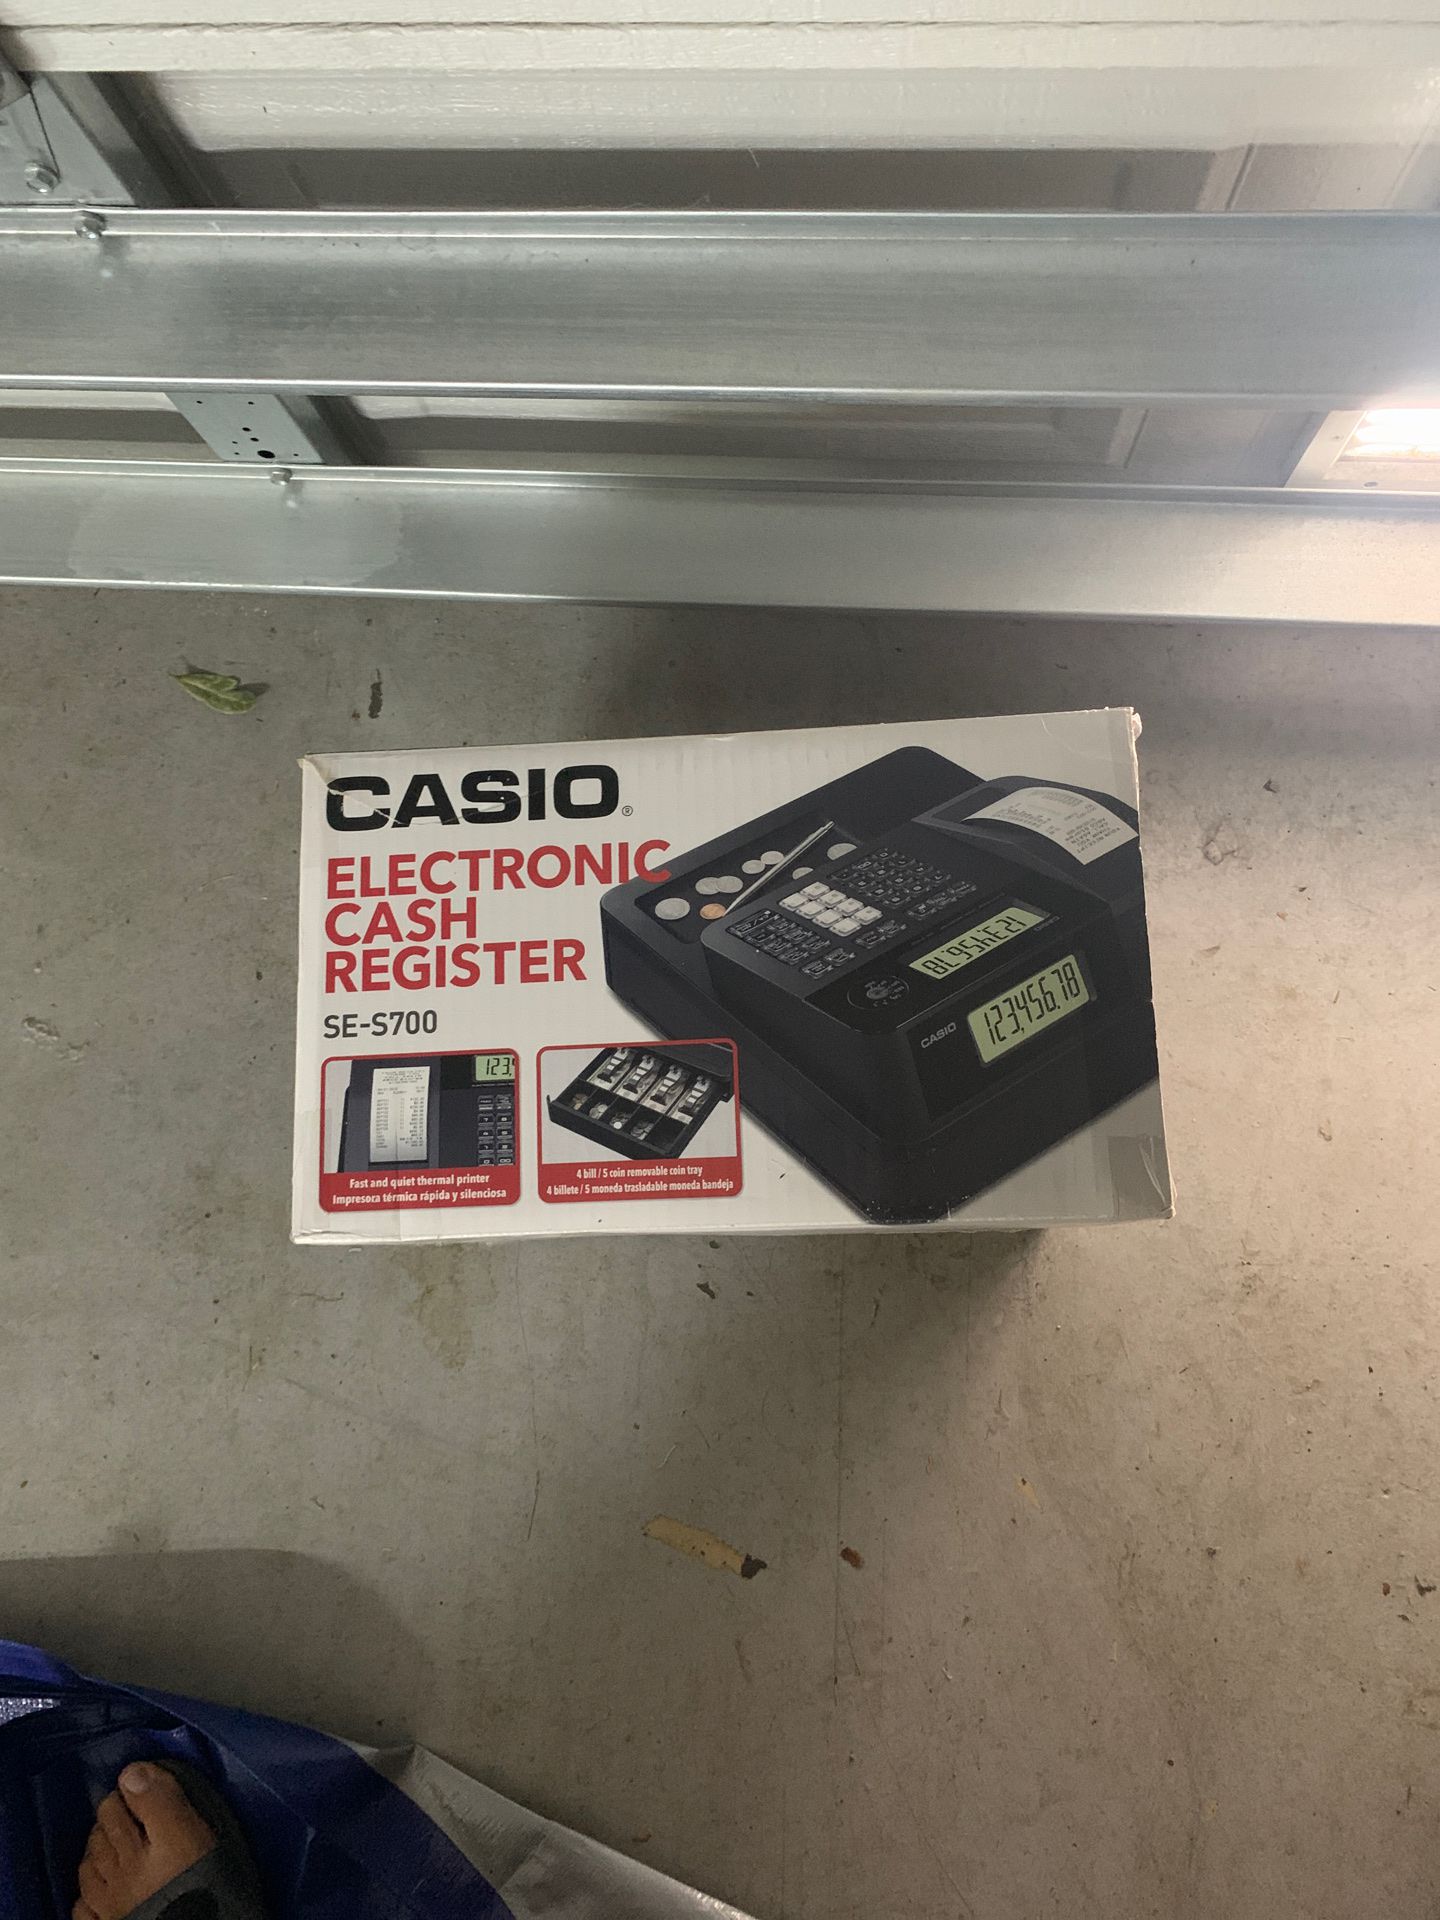 Casio electronic cash register